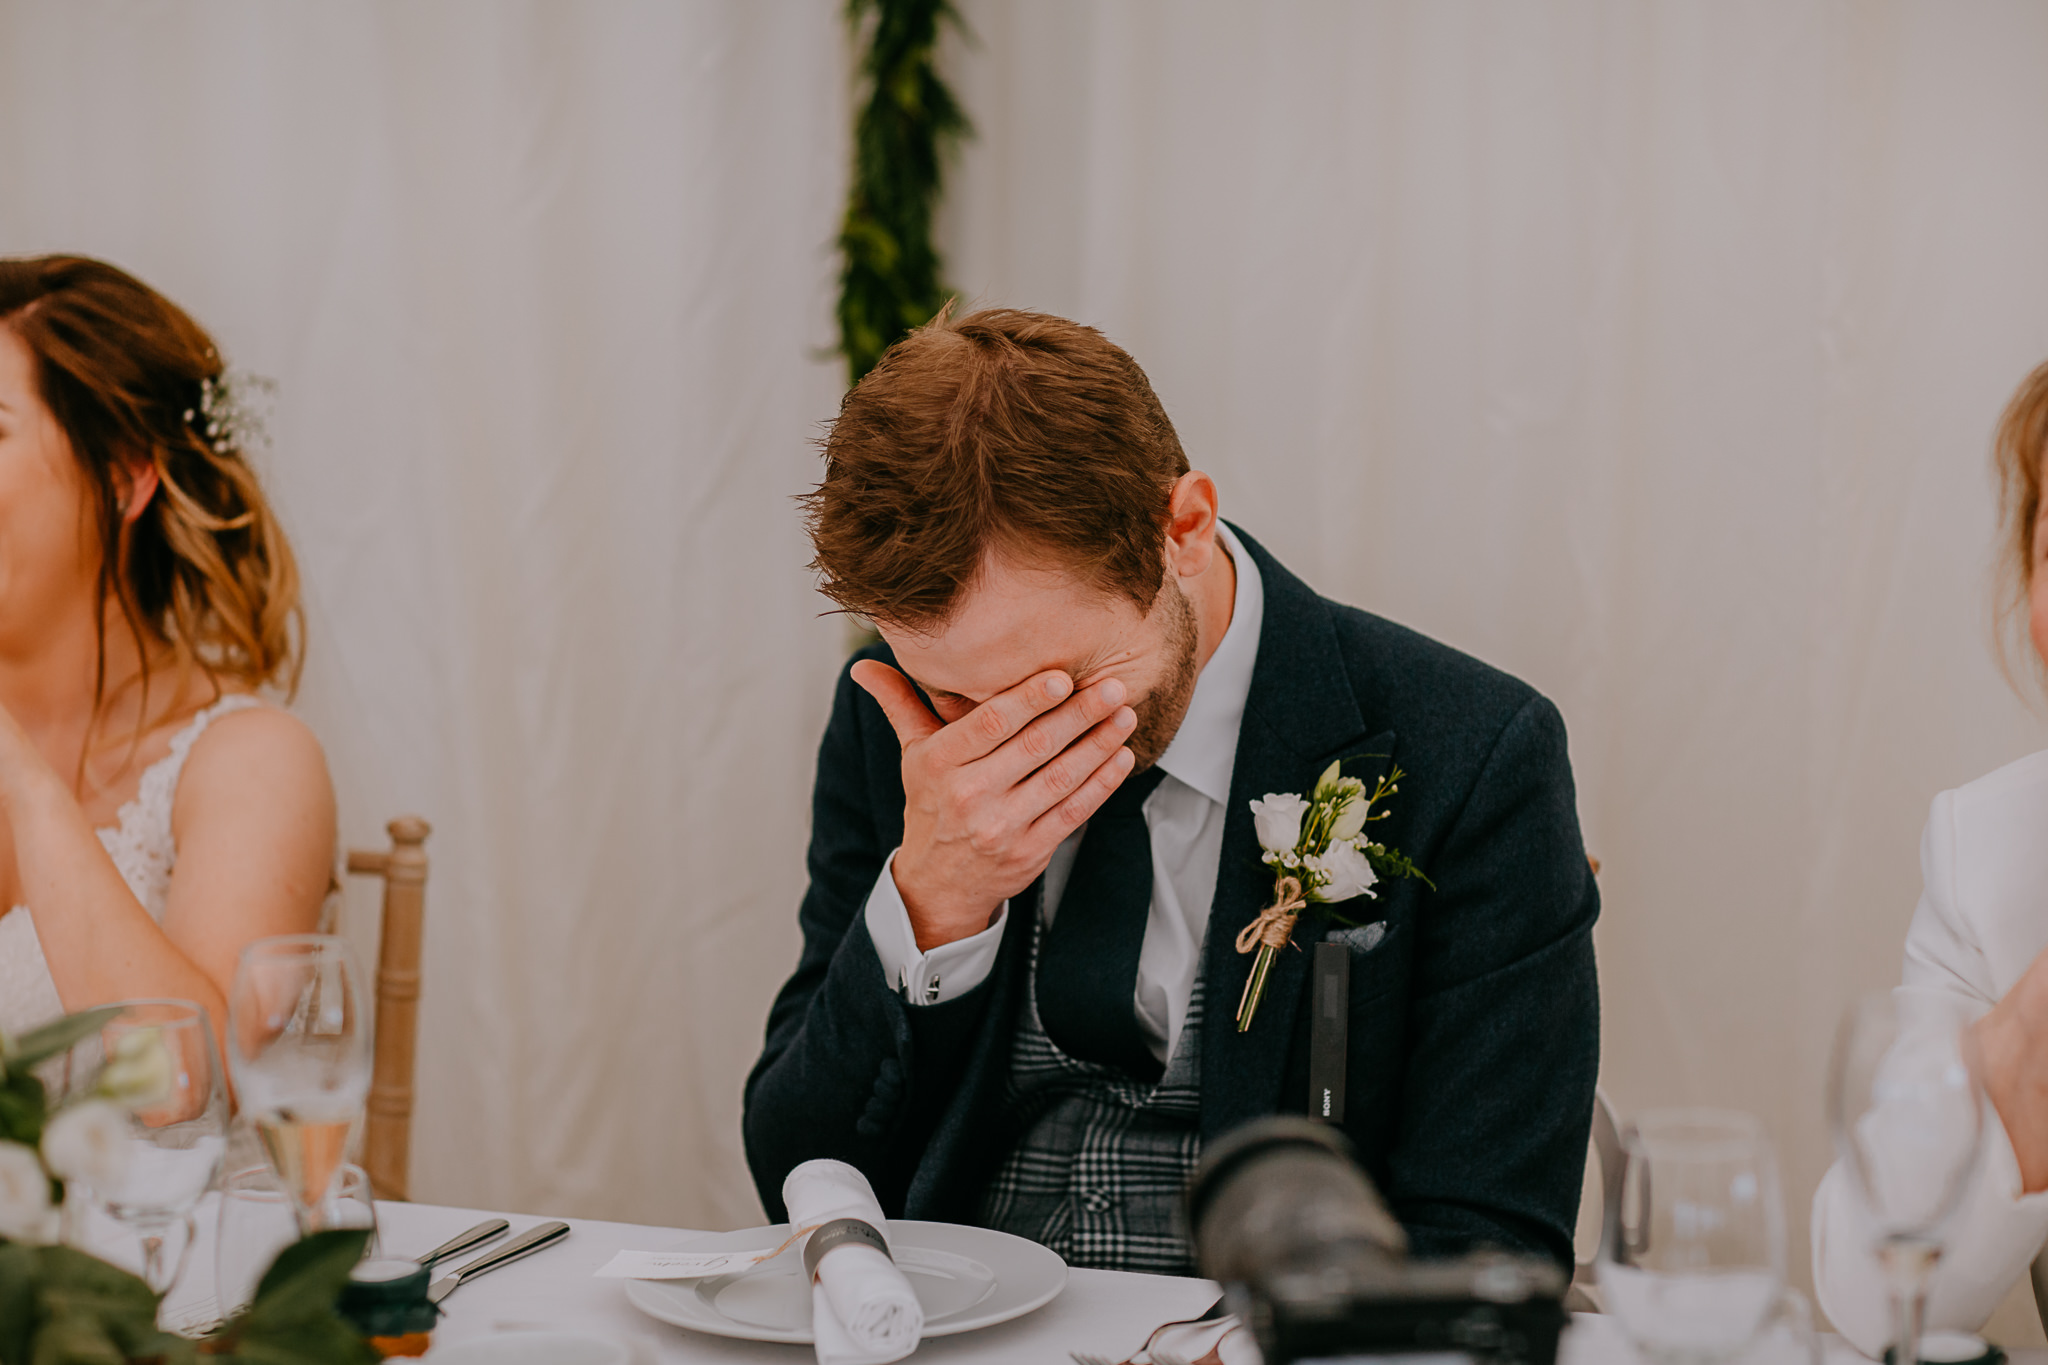  embarrassed groom wedding speeches 